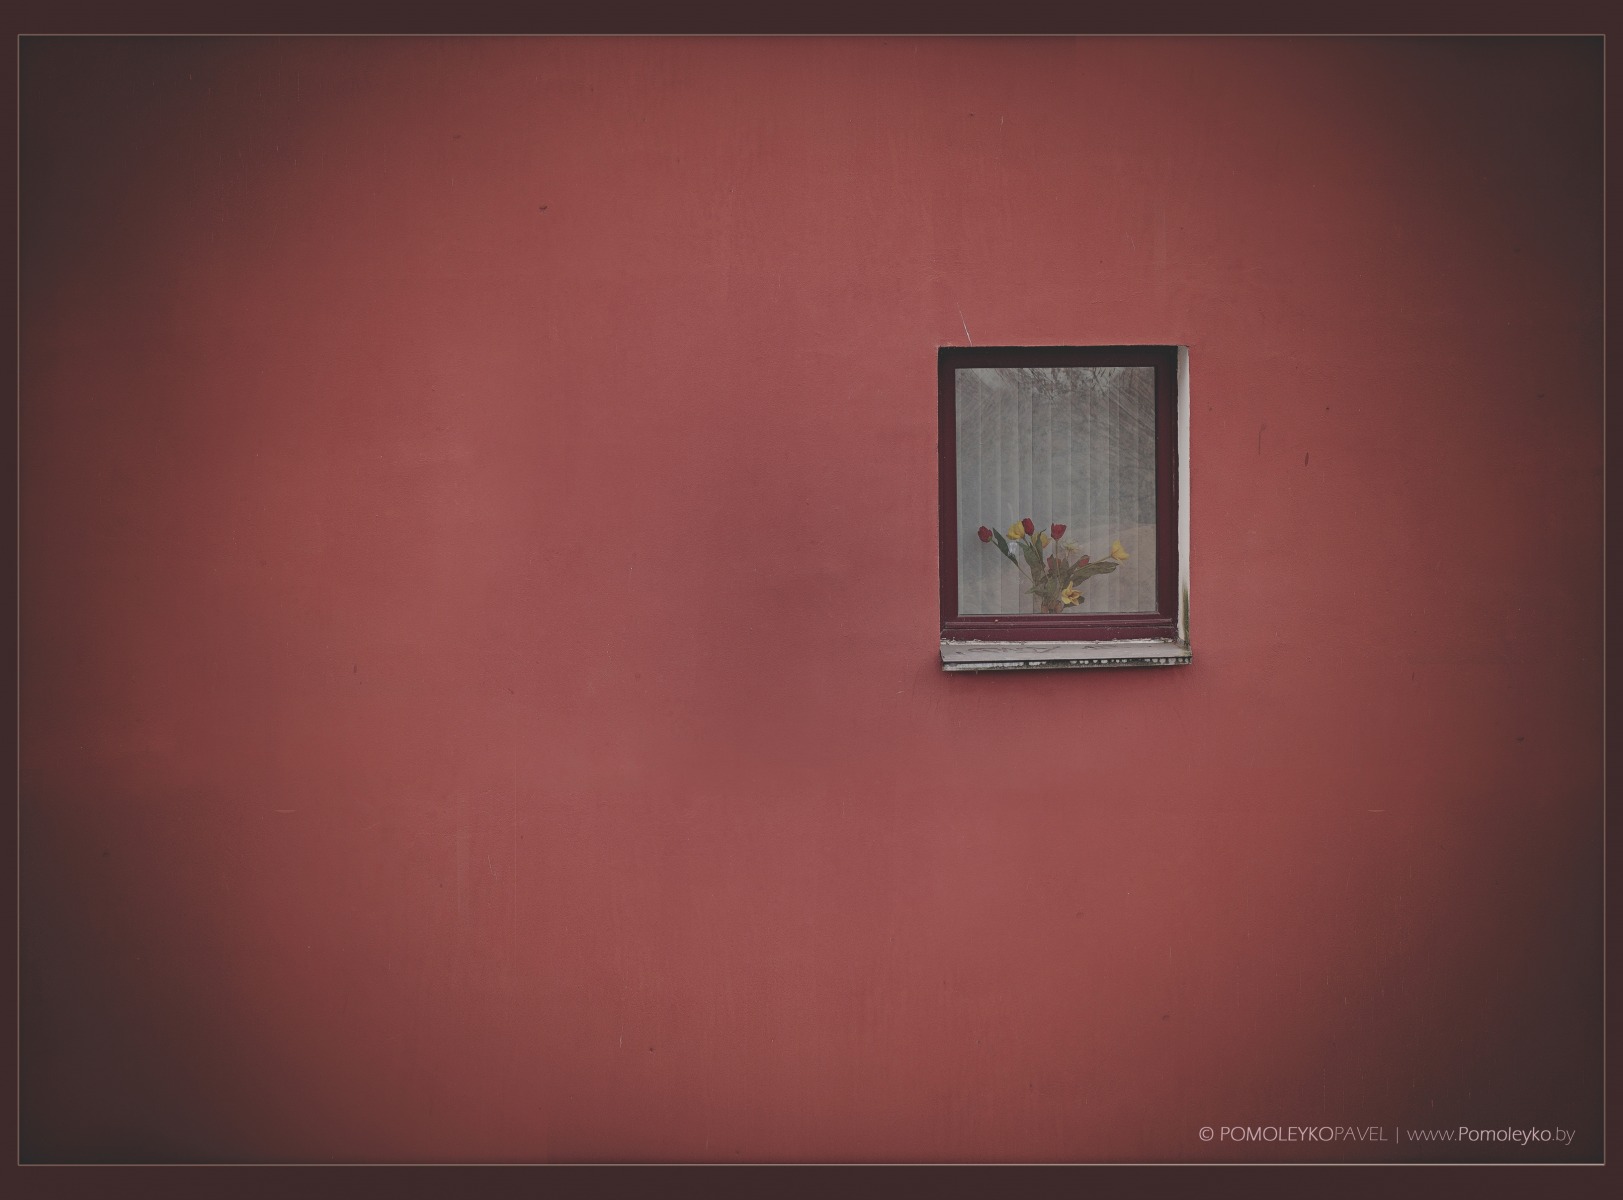 Стена. Окно. За ним цветы | Фотограф Павел Помолейко | foto.by фото.бай